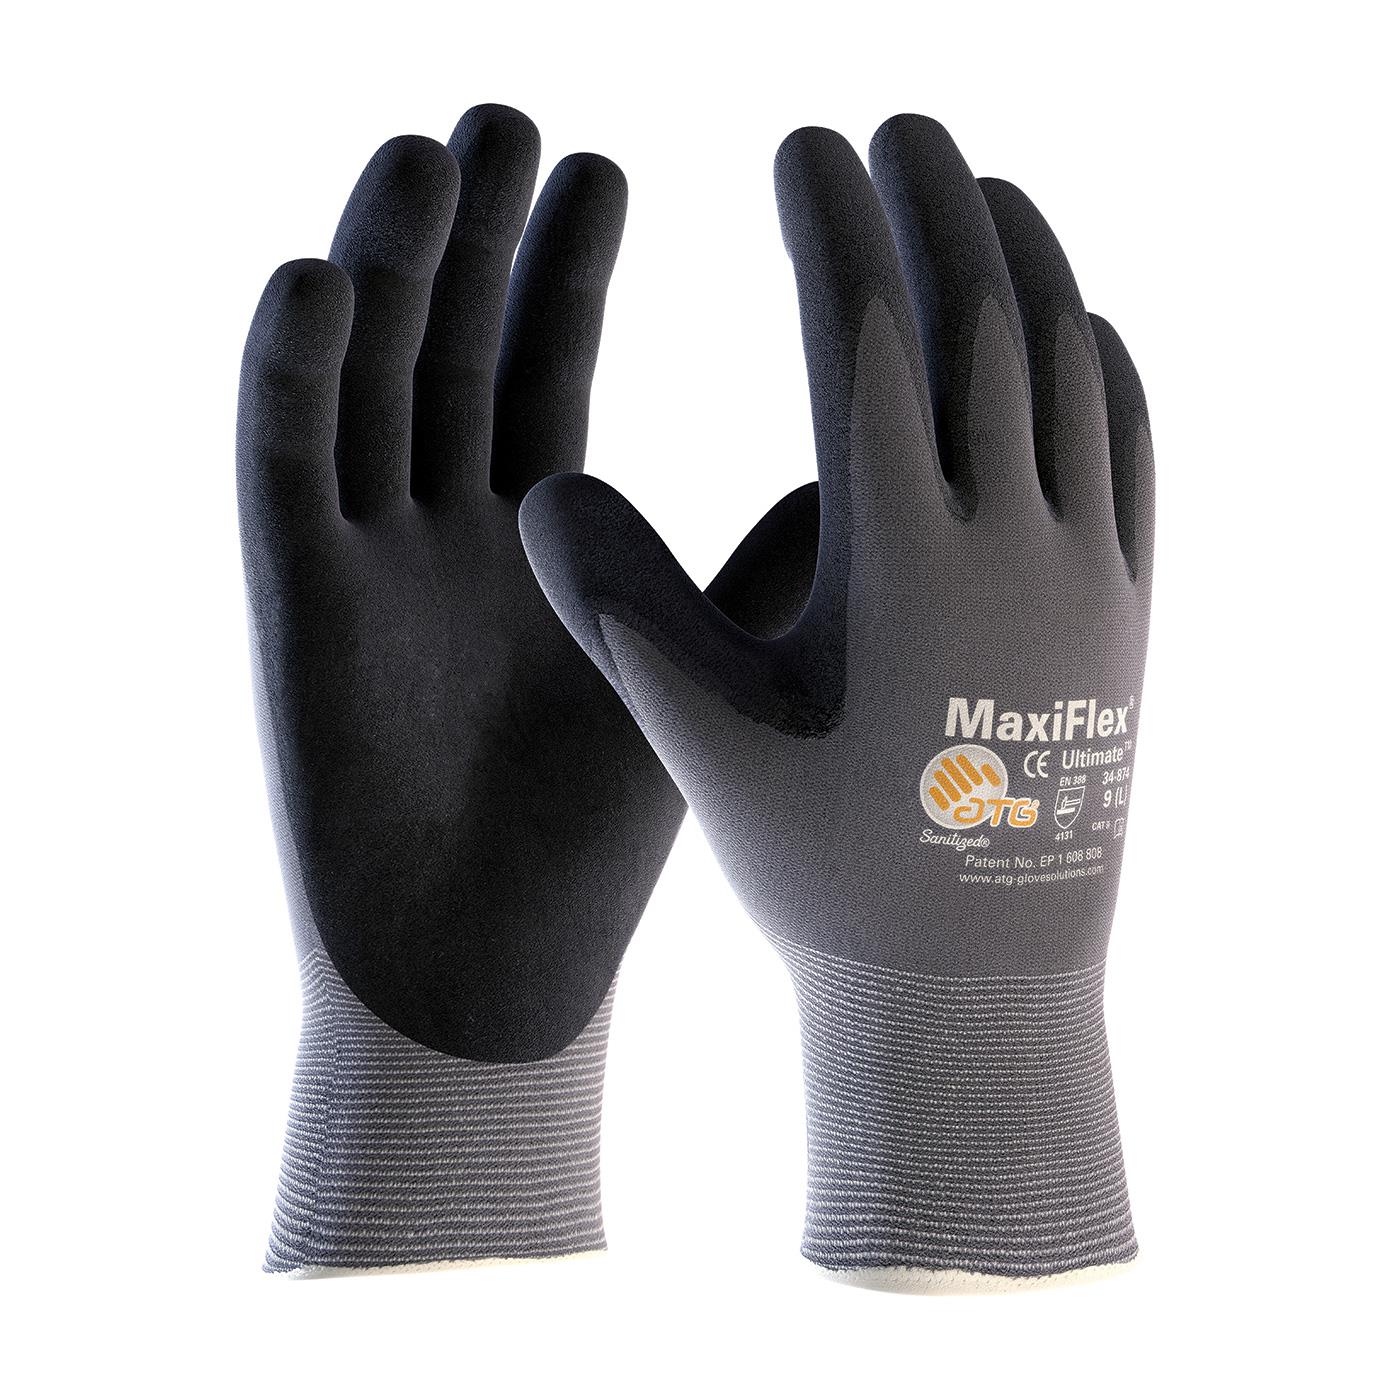 MAXIFLEX ULTIMATE MICROFOAM NITRILE PALM - Nitrile Coated Gloves